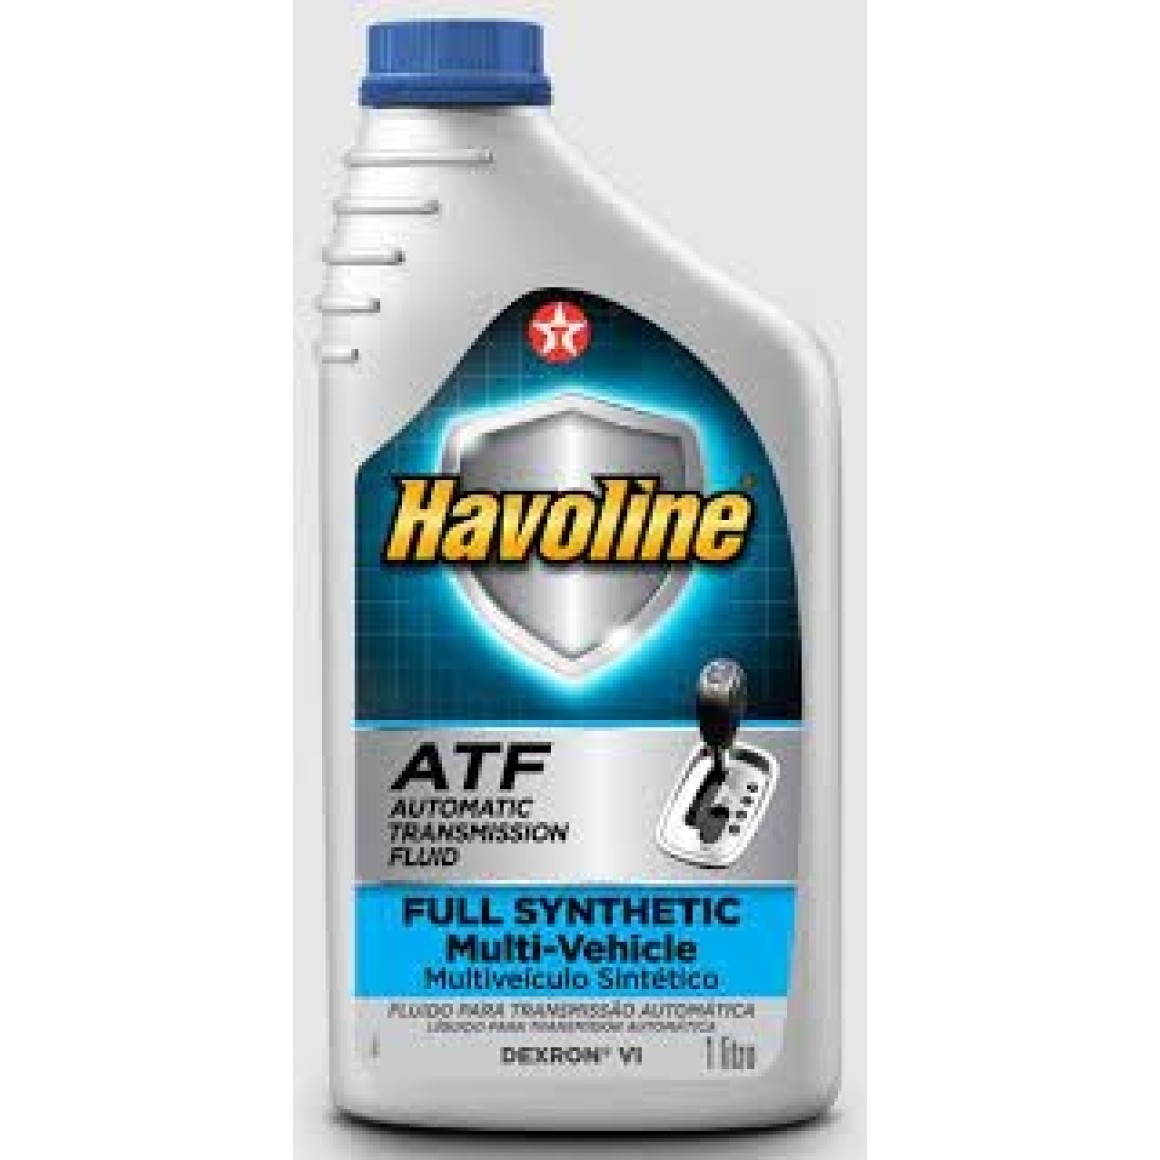 Havoline Full Synthetic Multi-Vehicle ATF